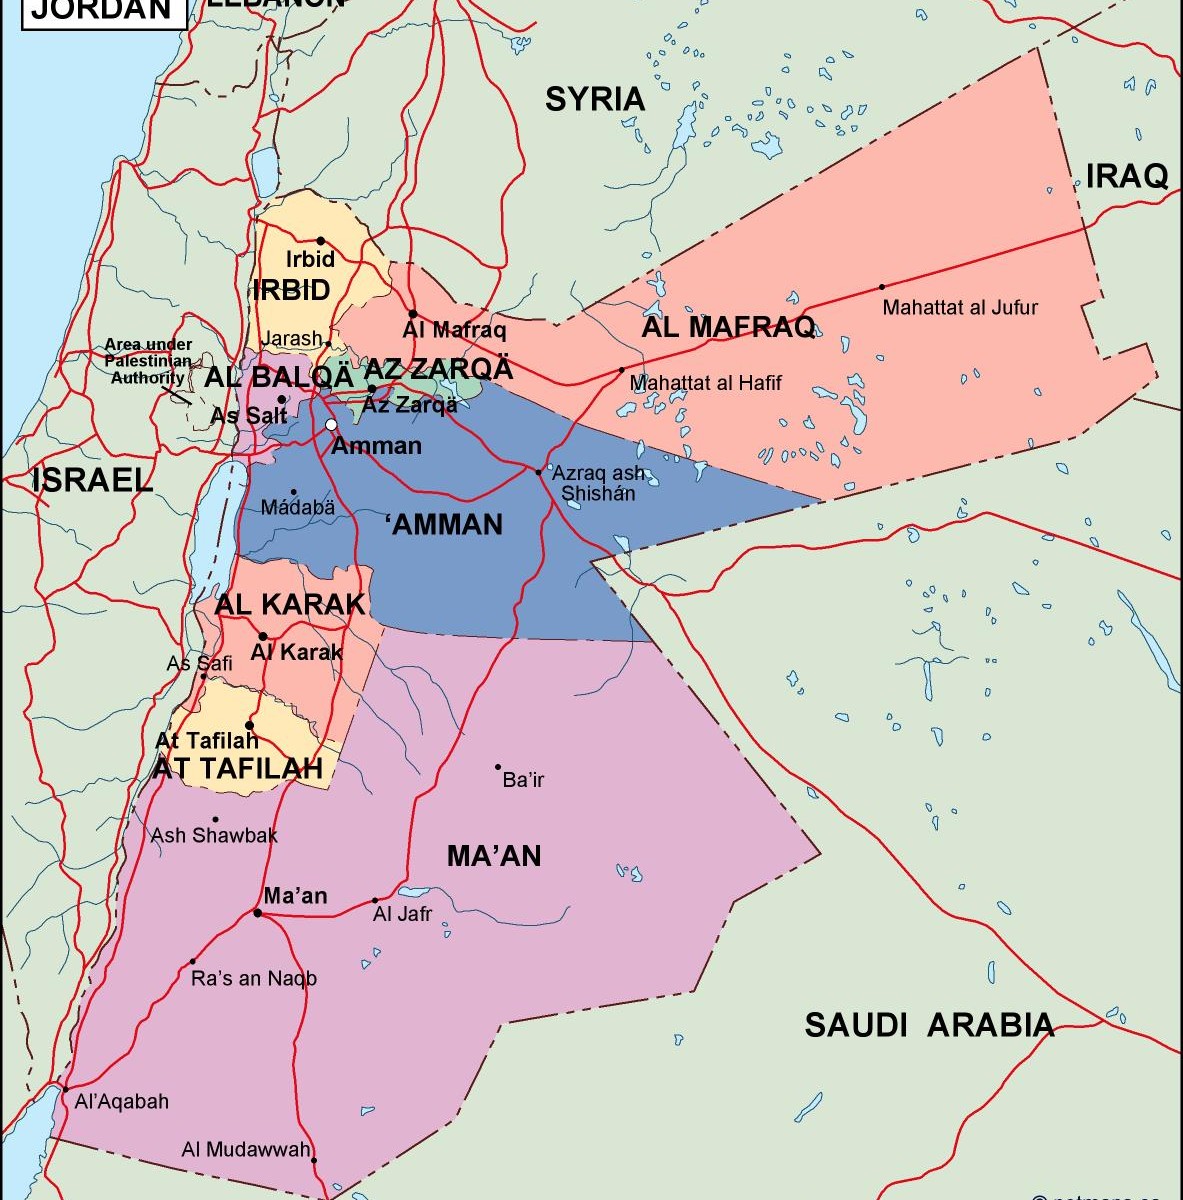 Jordan Political Map 1183x1200 